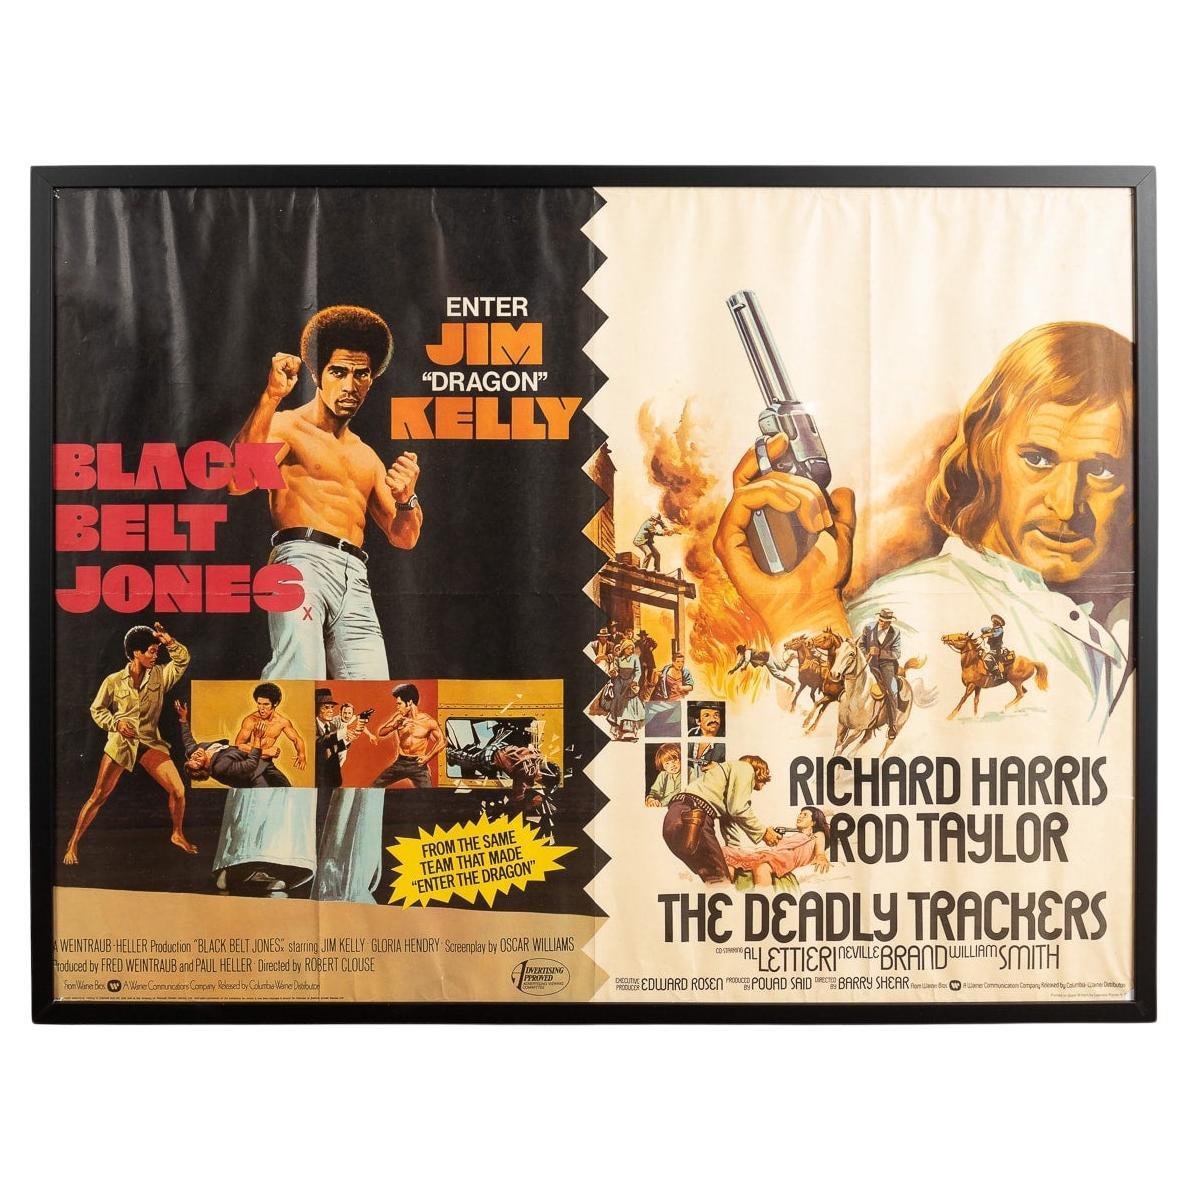 Original British Quad Black Belt Jones / Deadly Trackers Movie Poster, c.1973 For Sale